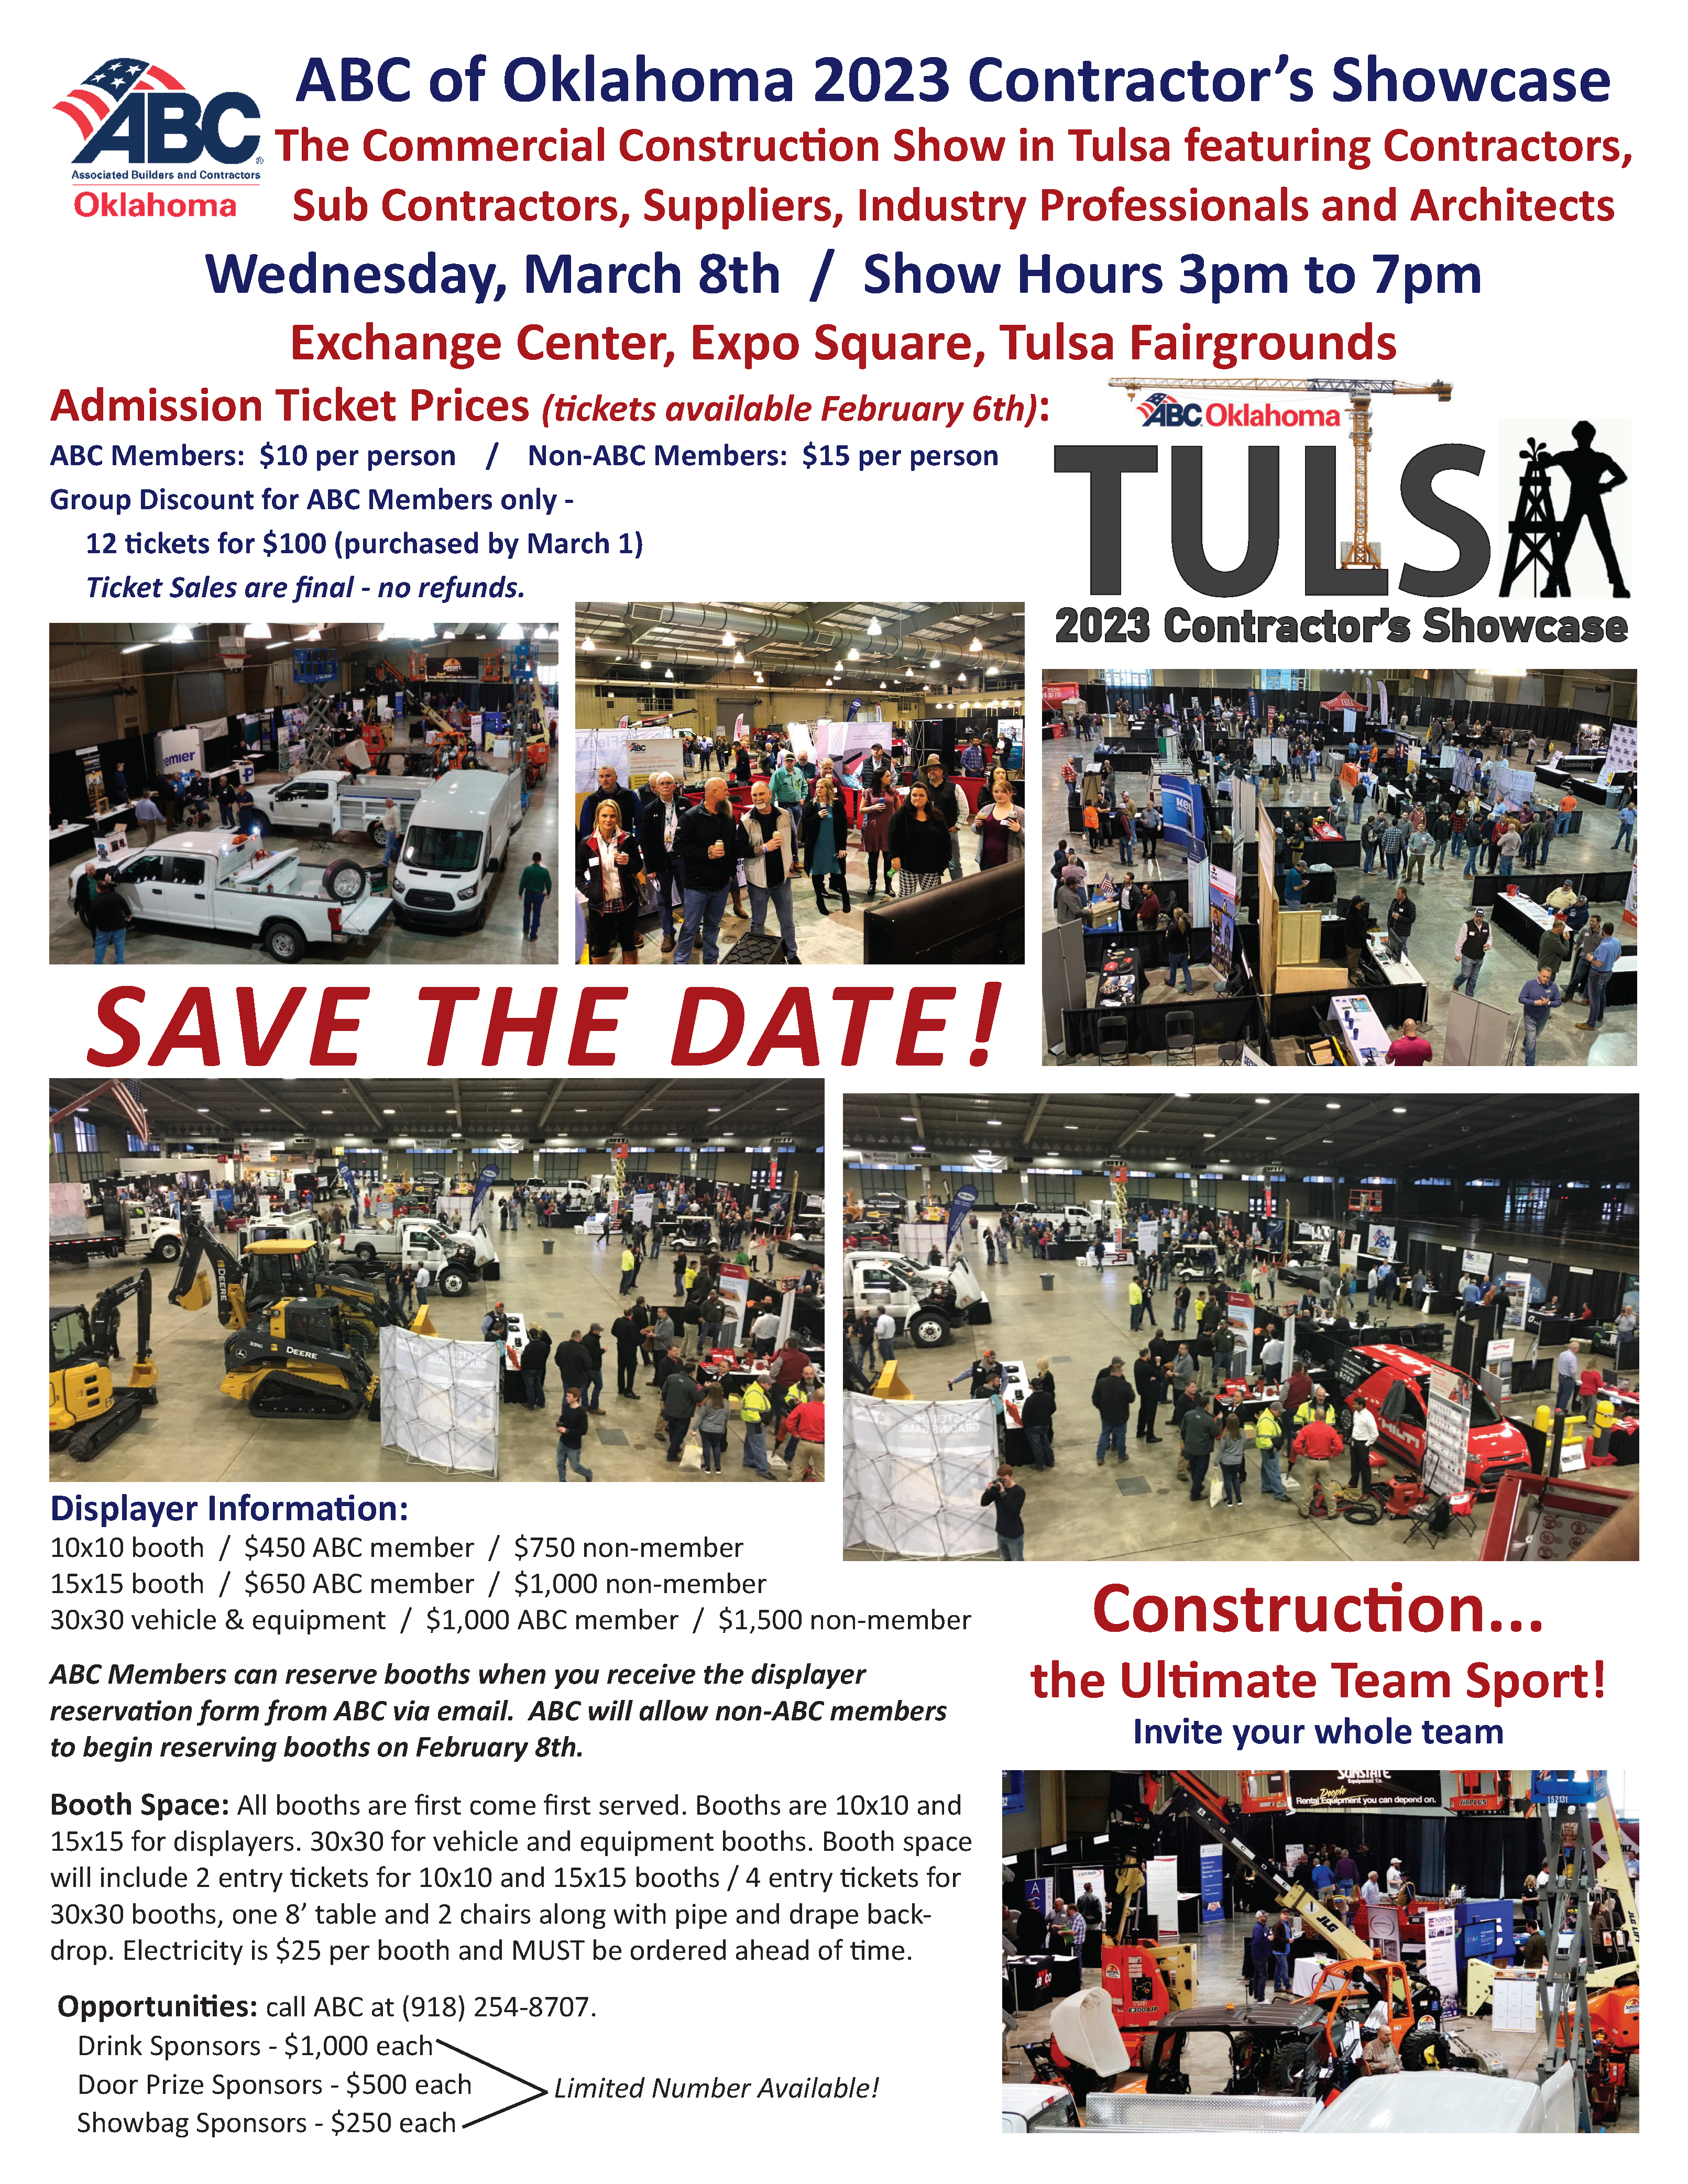 2023 Tulsa Contractor's Showcase Save the Date